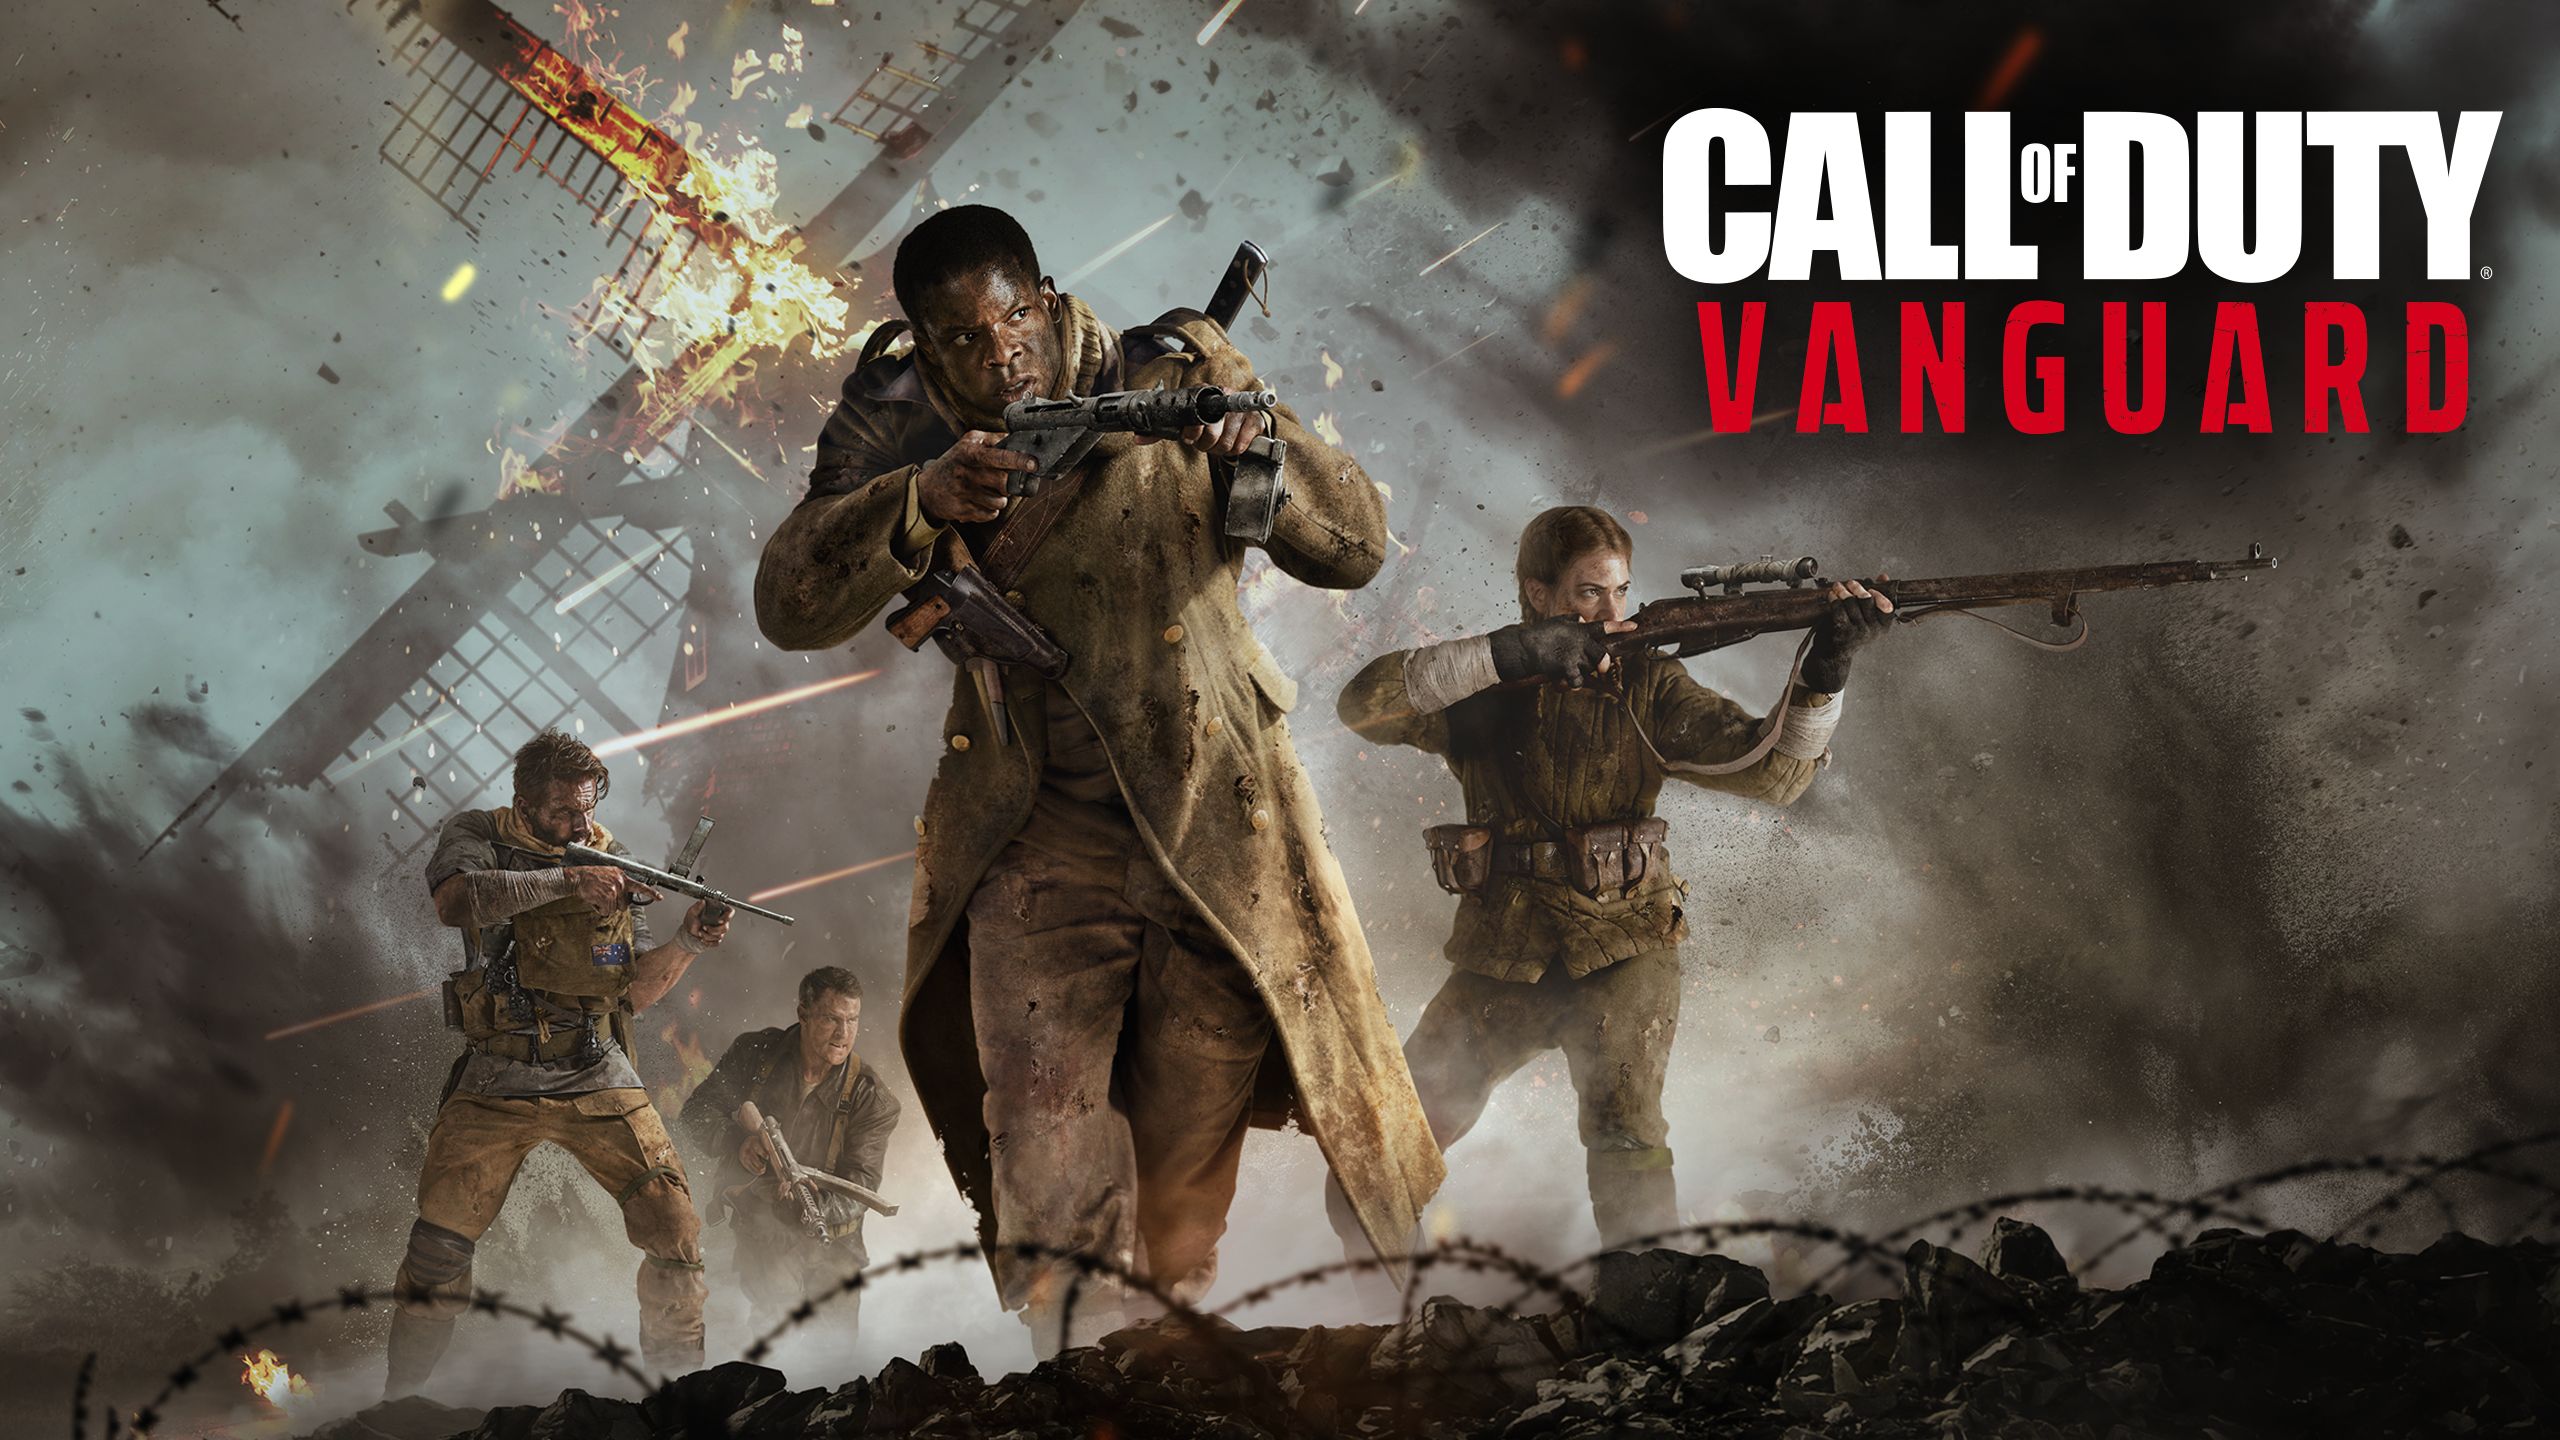 Call of duty god. Call of Duty Авангард. Call of Duty Vanguard 2. Call of Duty Vanguard картинки. Call of Duty: WWII Vanguard.